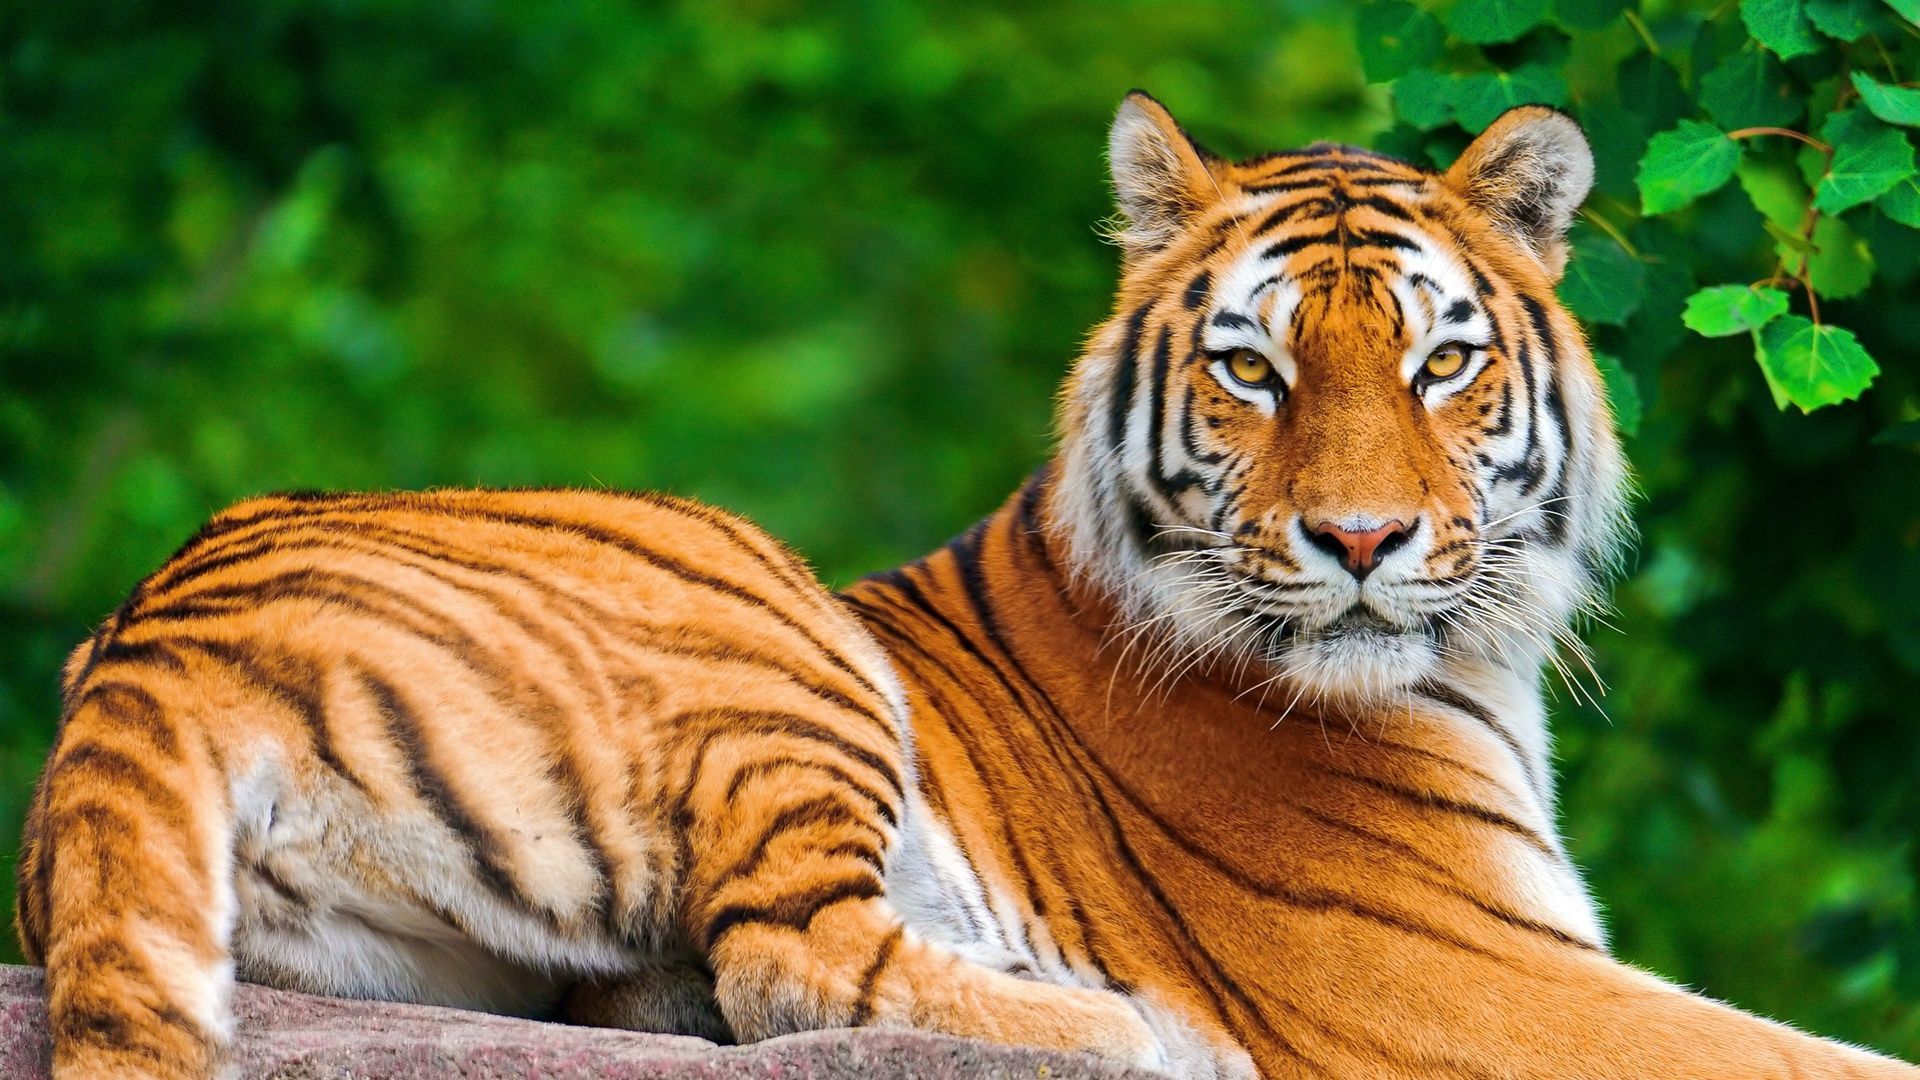 Tiger wallpaper desktop